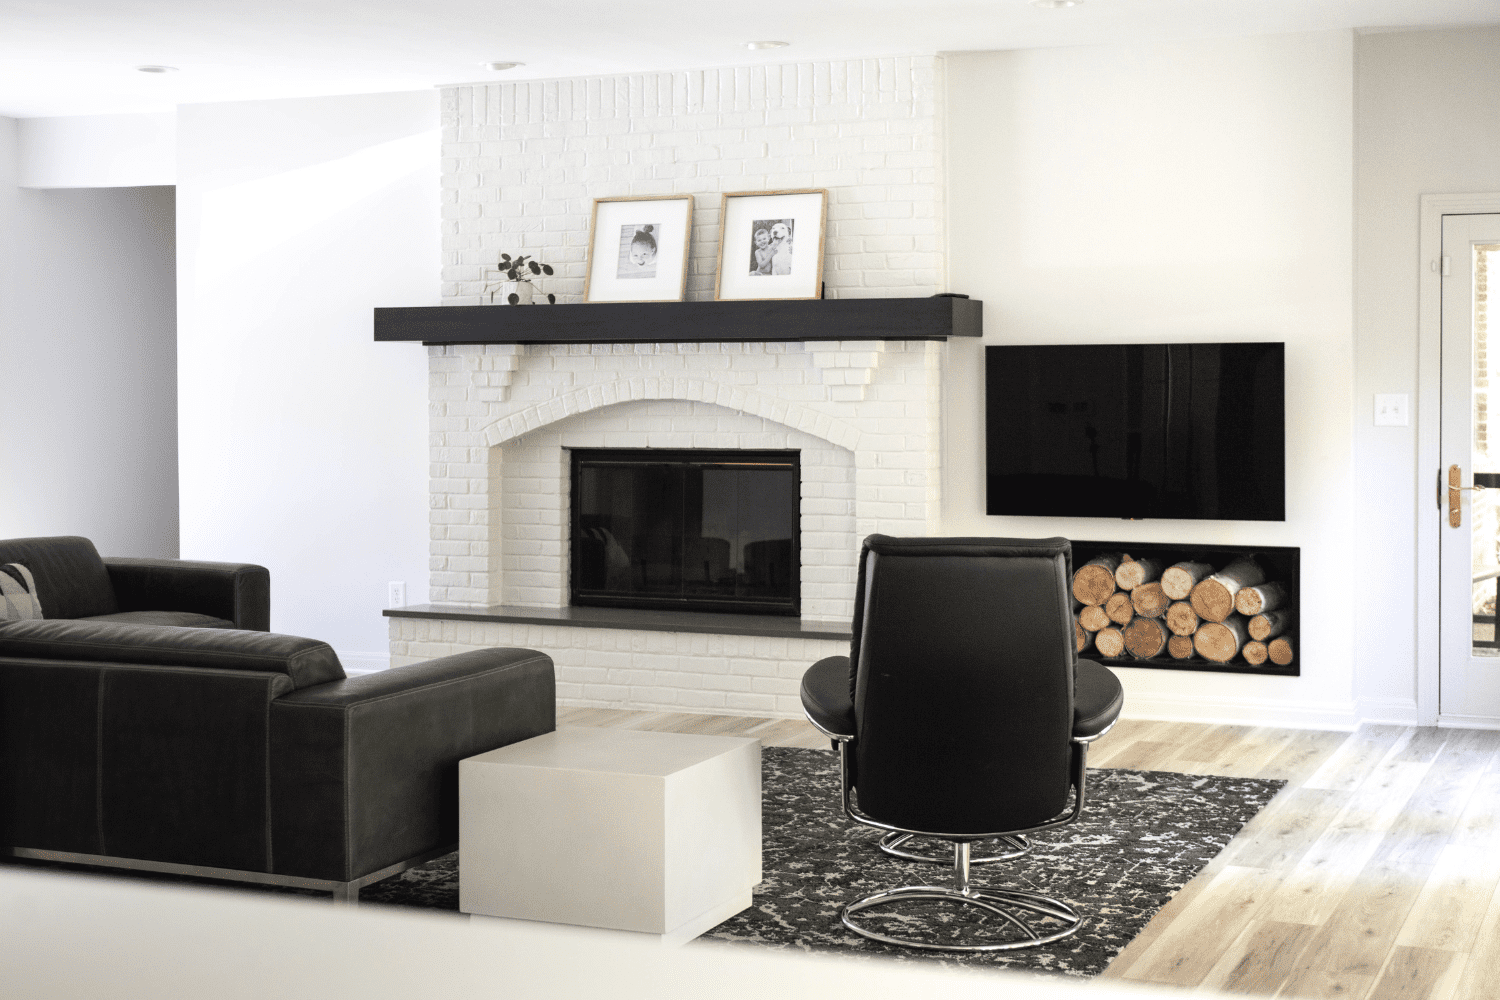 Nicholas Design Build | A living room with a fireplace.